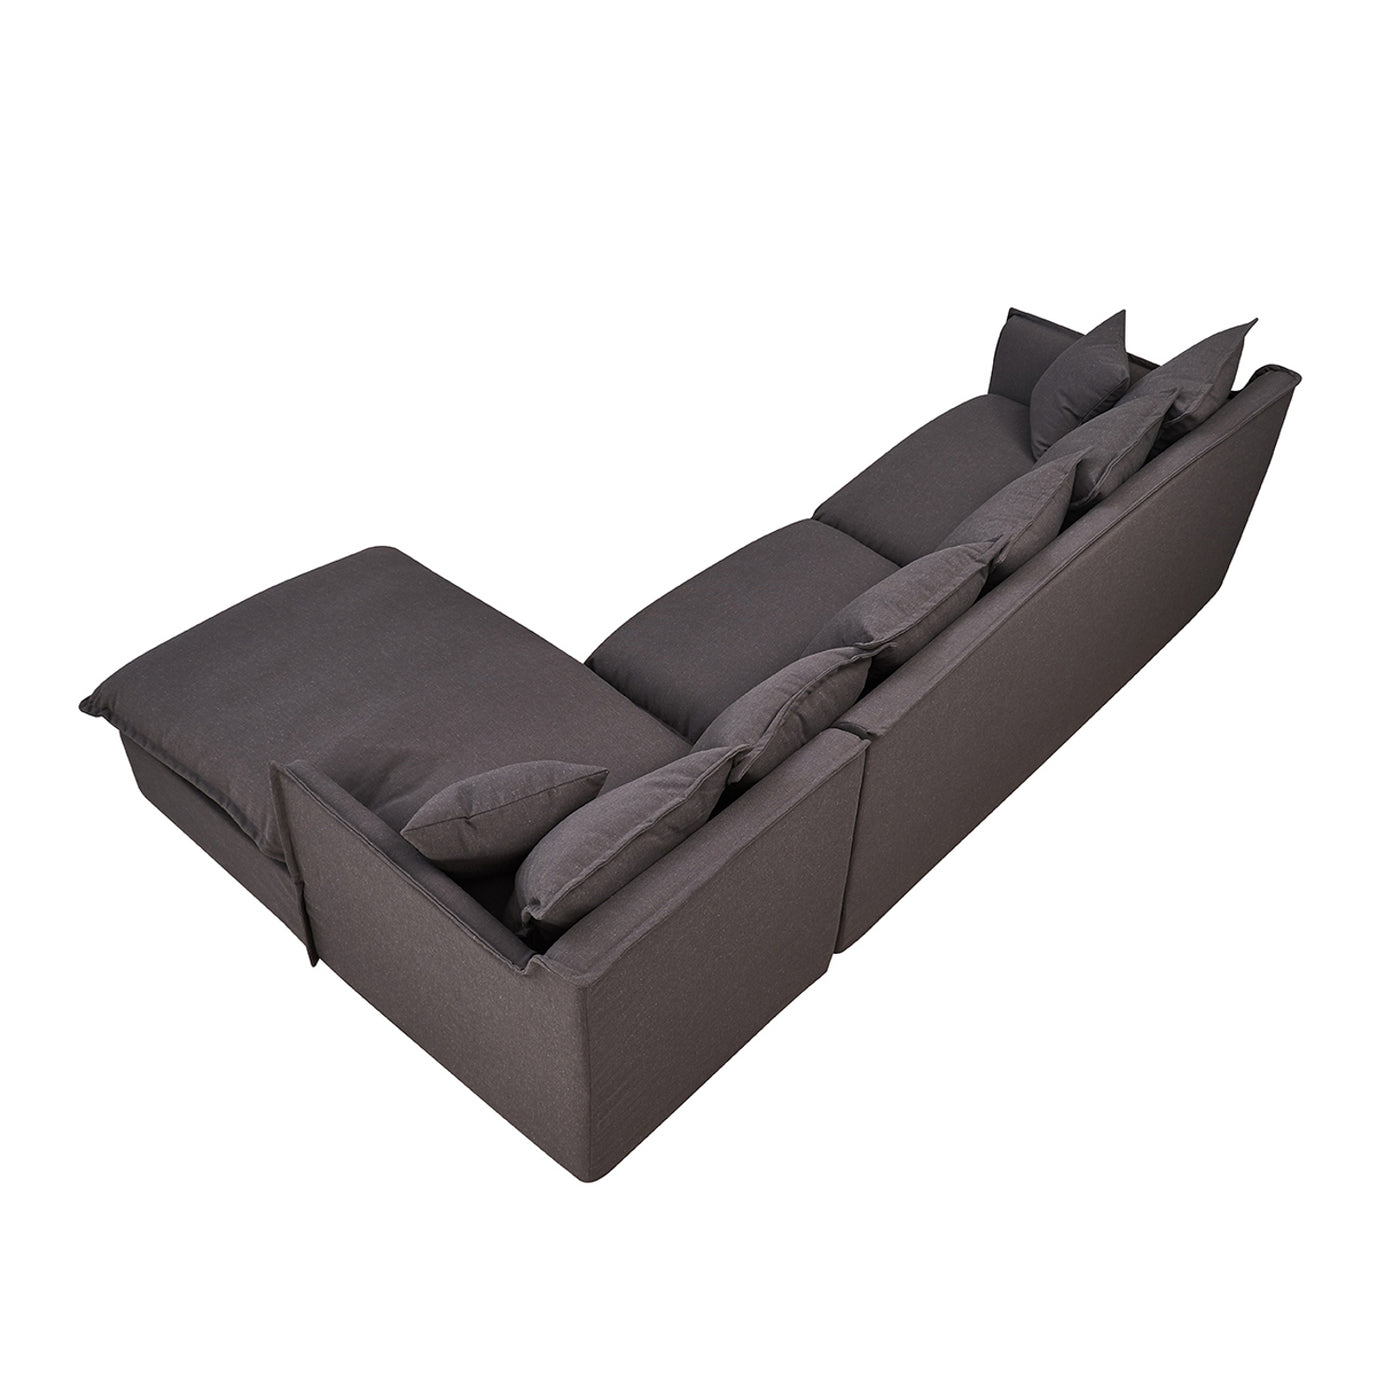 Cooper Left-Side L-Shaped Modular Sofa